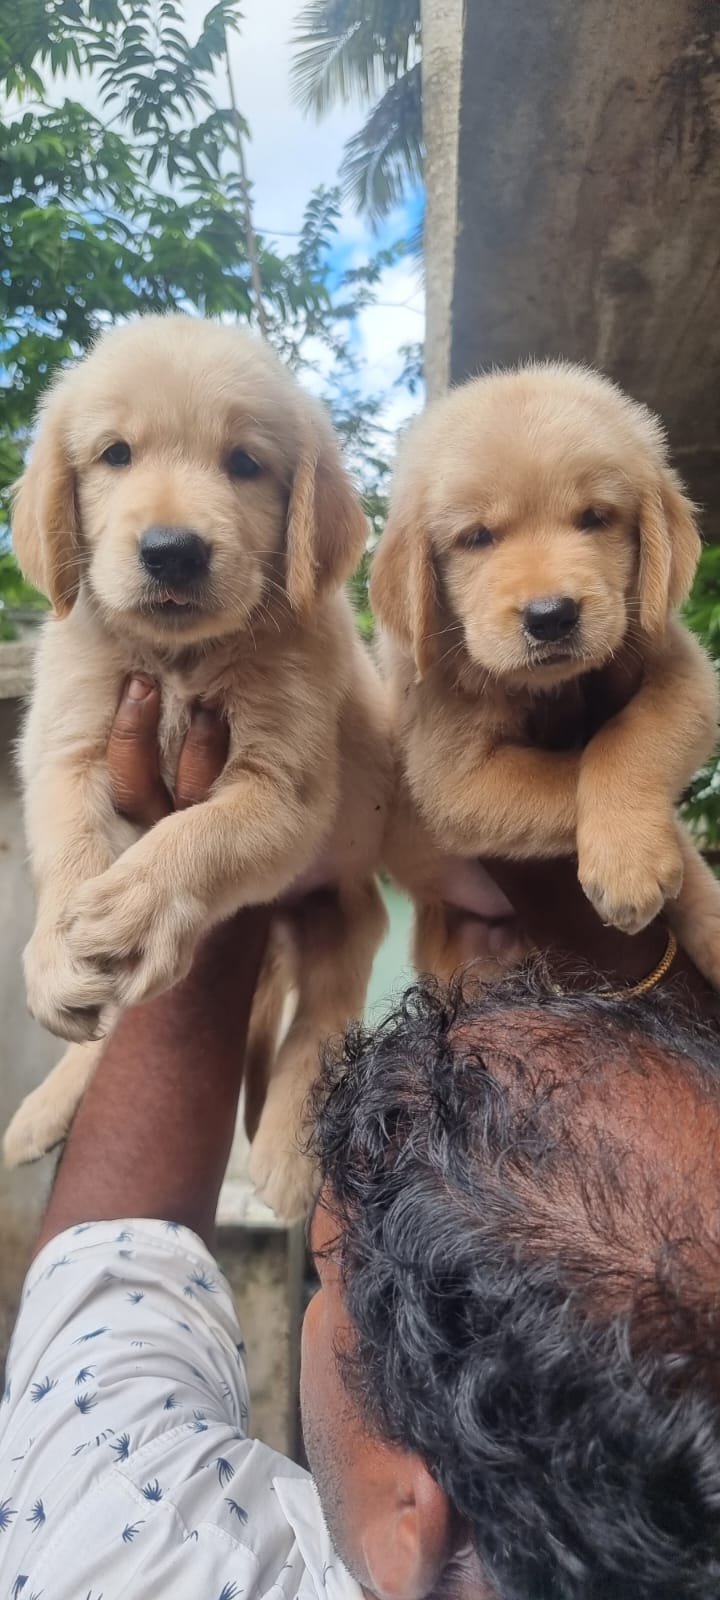 Golden retriever puppies from Chennai. Breeder: Manikandan